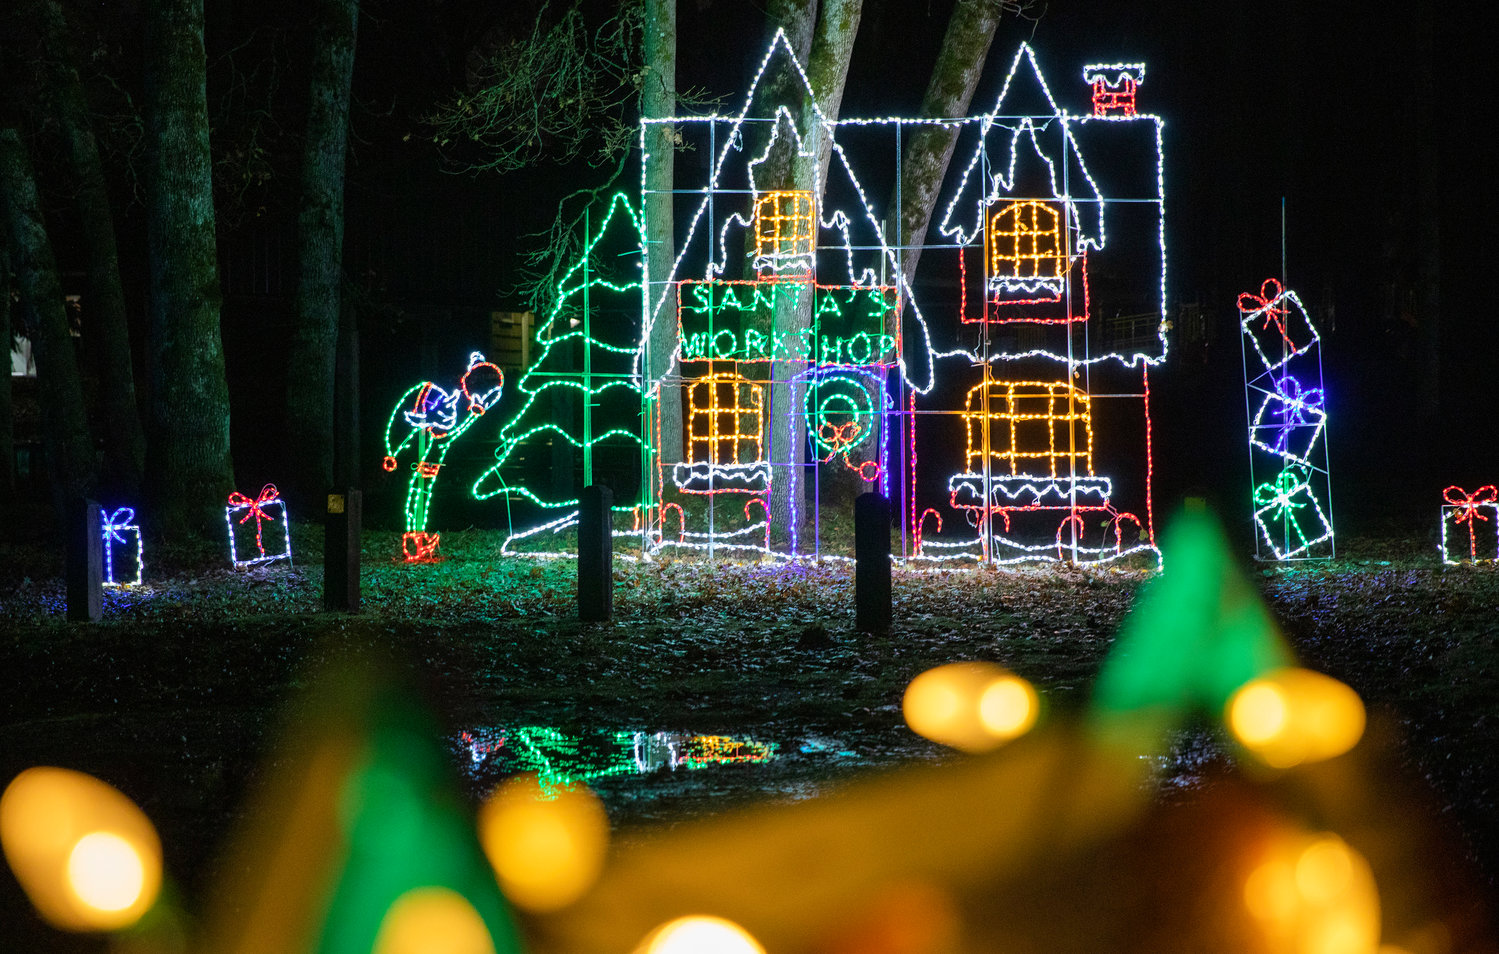 Santa’s Workshop is illuminated with Christmas Lights in Borst Park Thursday night.